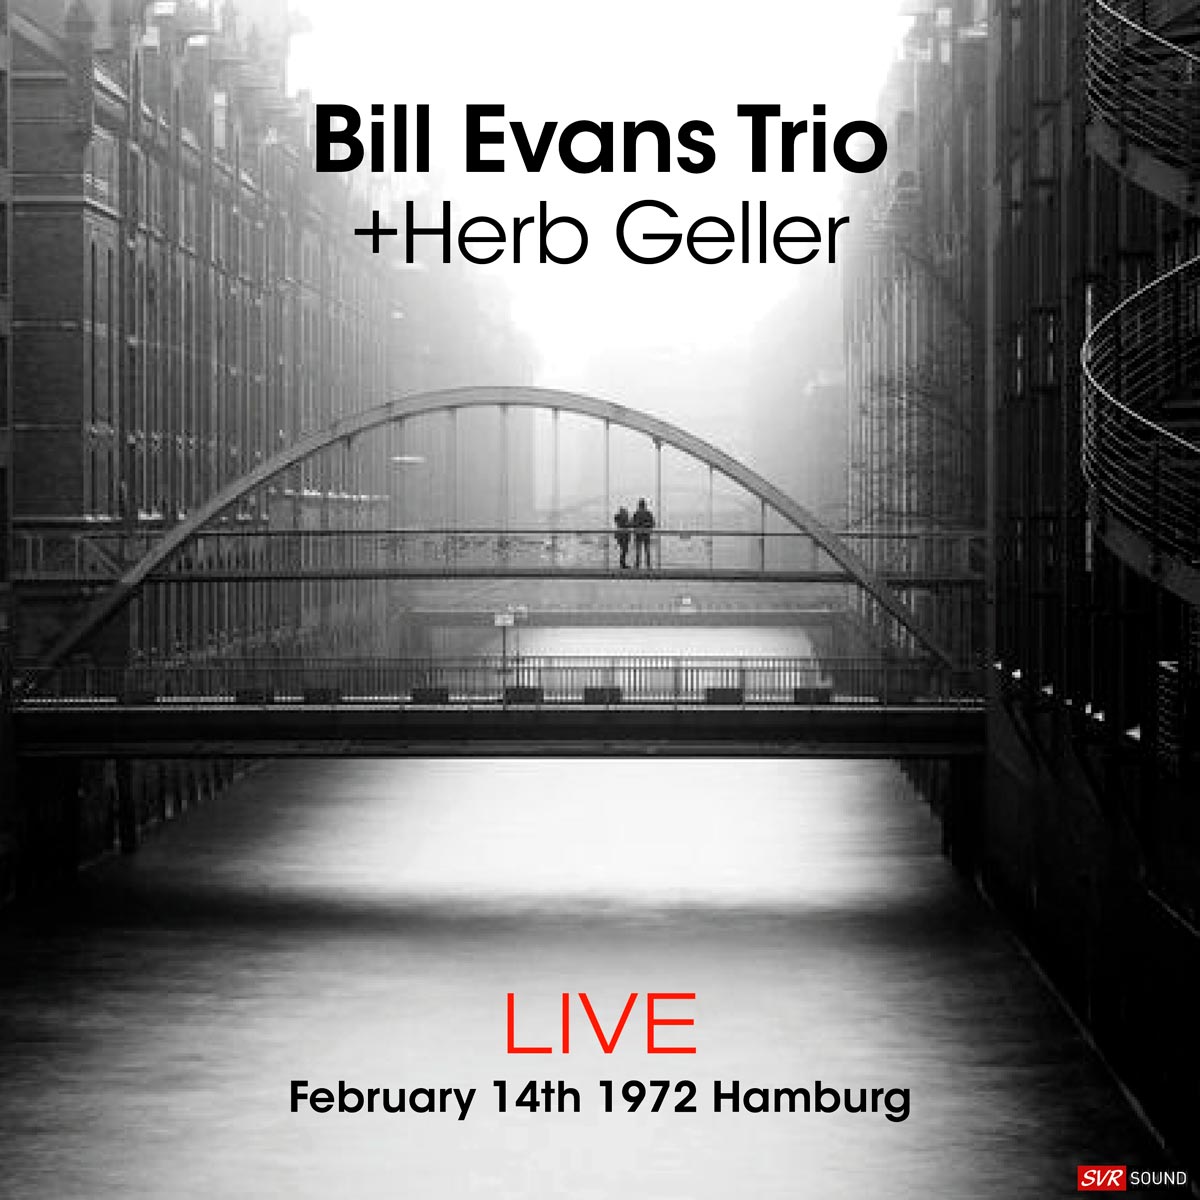 Bill Evans Trio +Herb Geller - Live February 14th. 1972 Hamburg